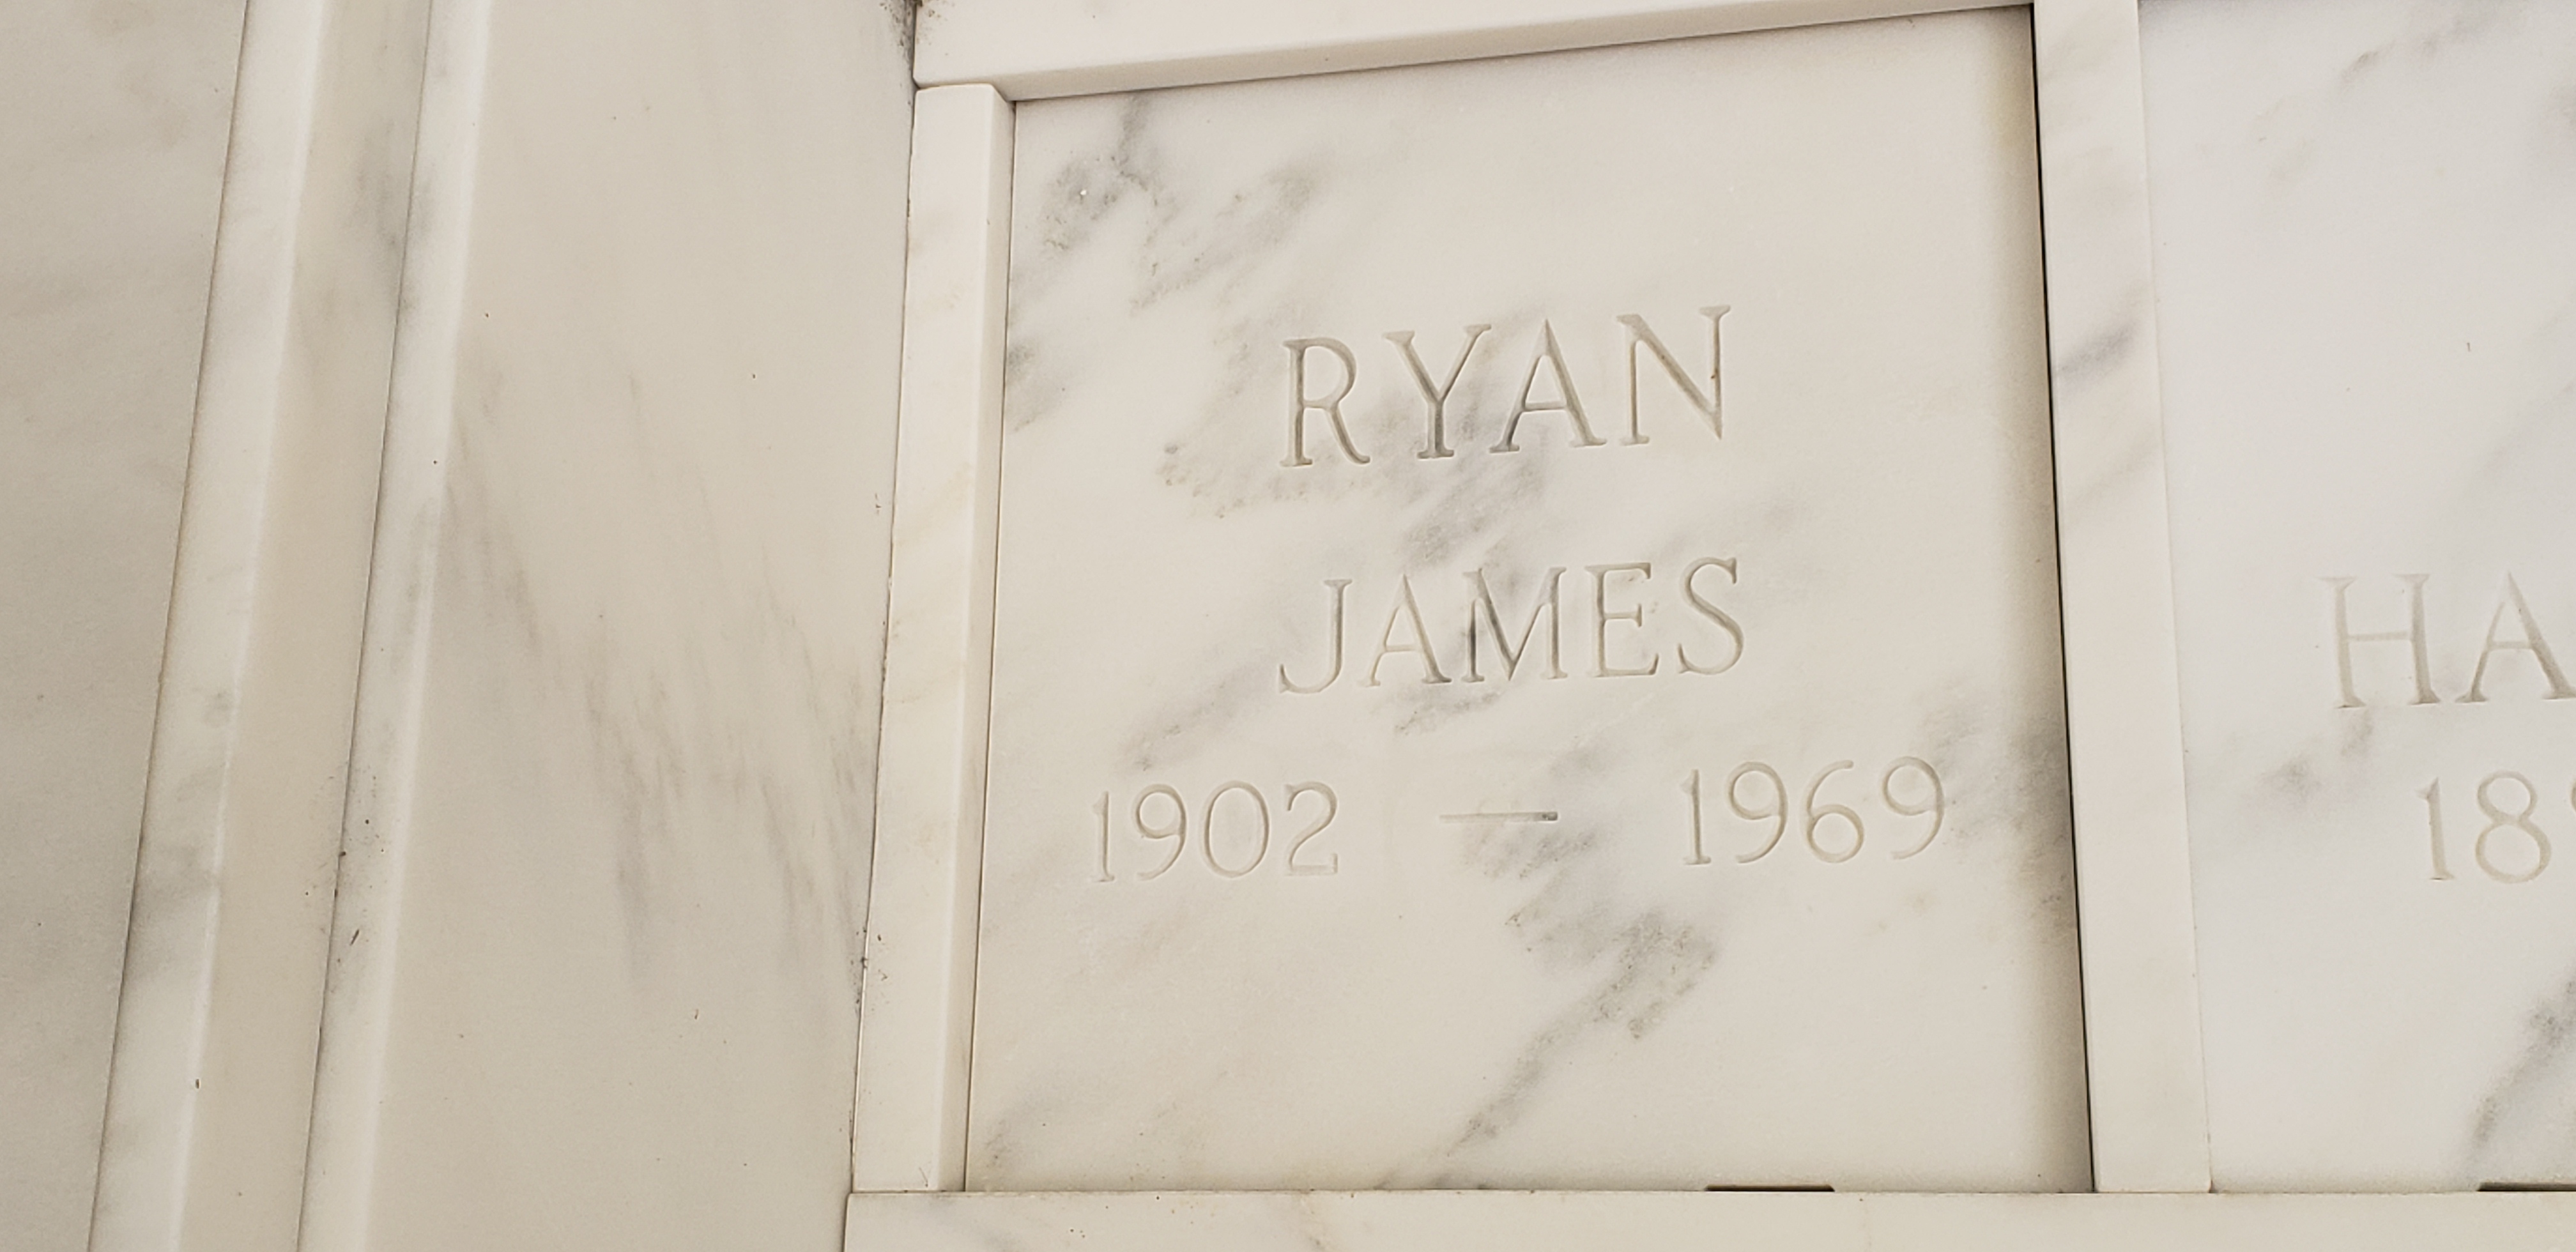 James Ryan